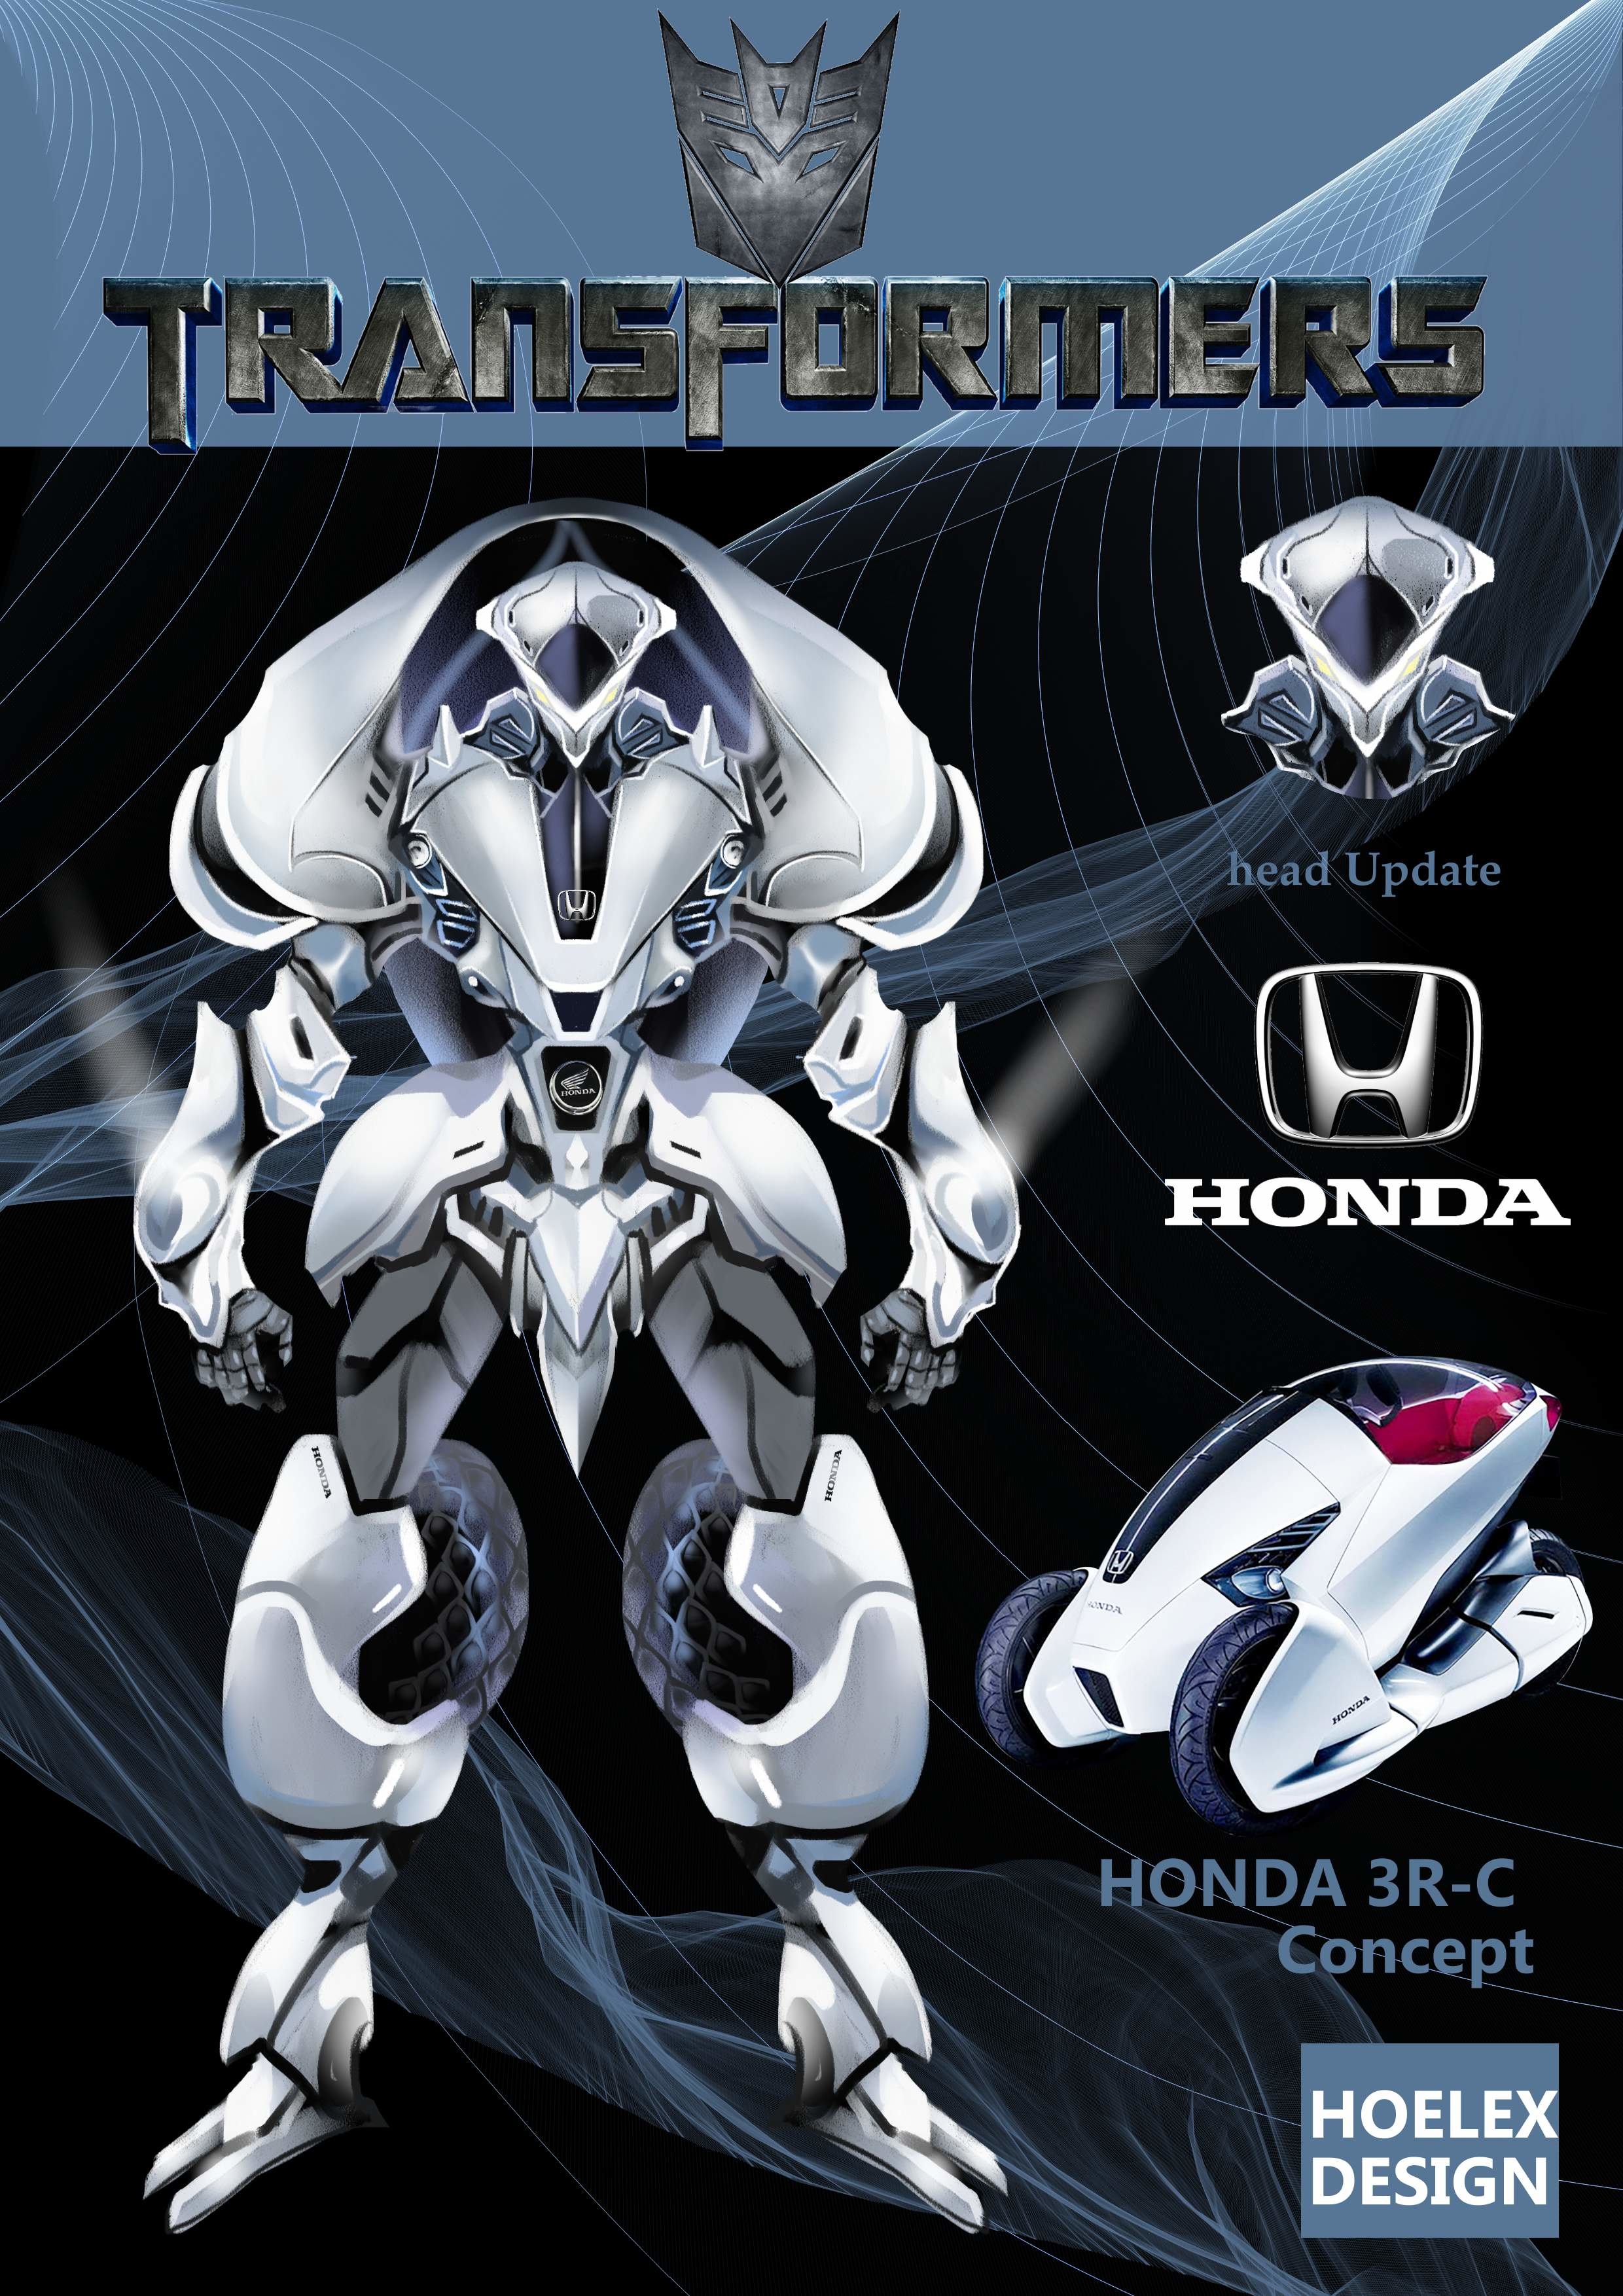 Transformers變形金剛-本田三輪電動小型概念車(HONDA 3R-C Concept)-HOELEX(背景).jpg